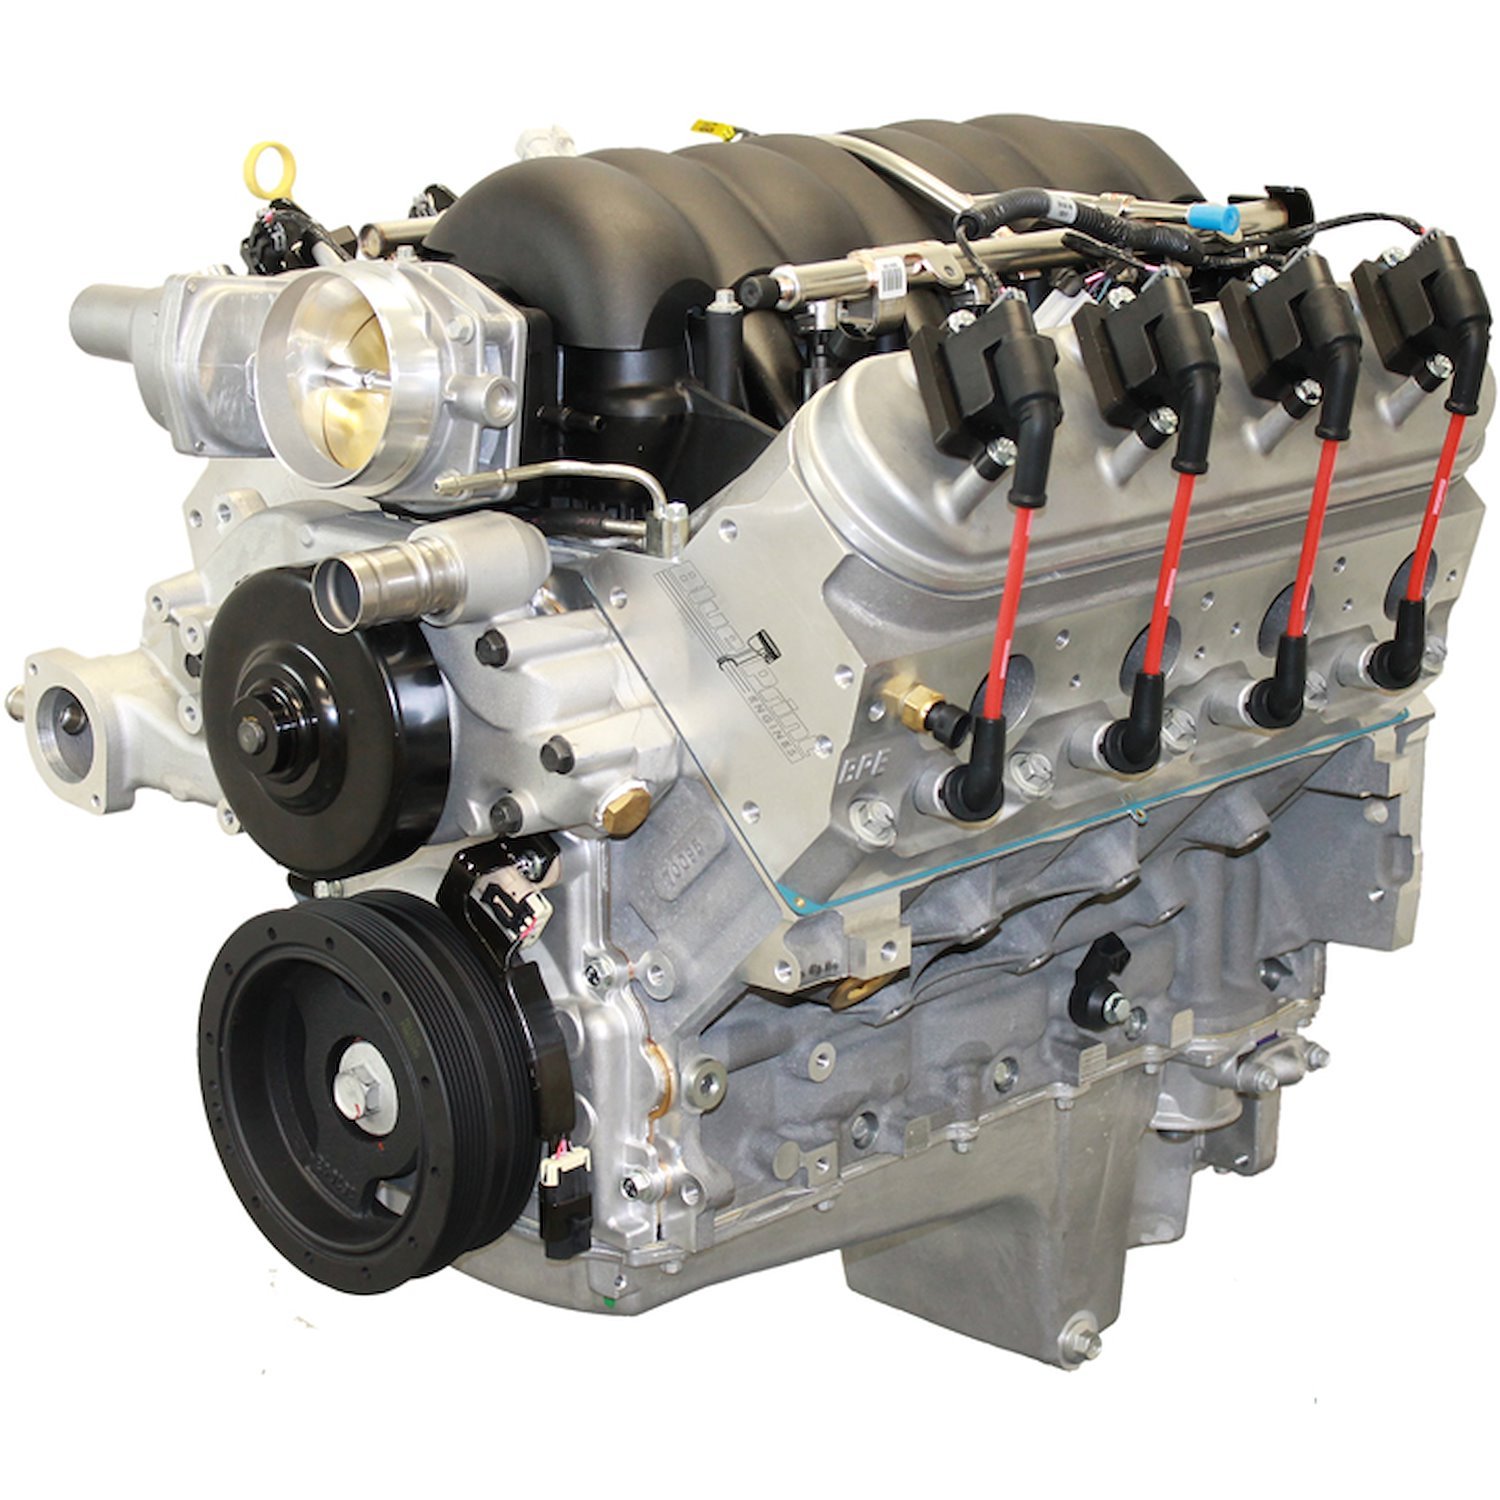 GM LS3 EFI Retrofit Dress Engine 530 HP, 495 FT.-LBS